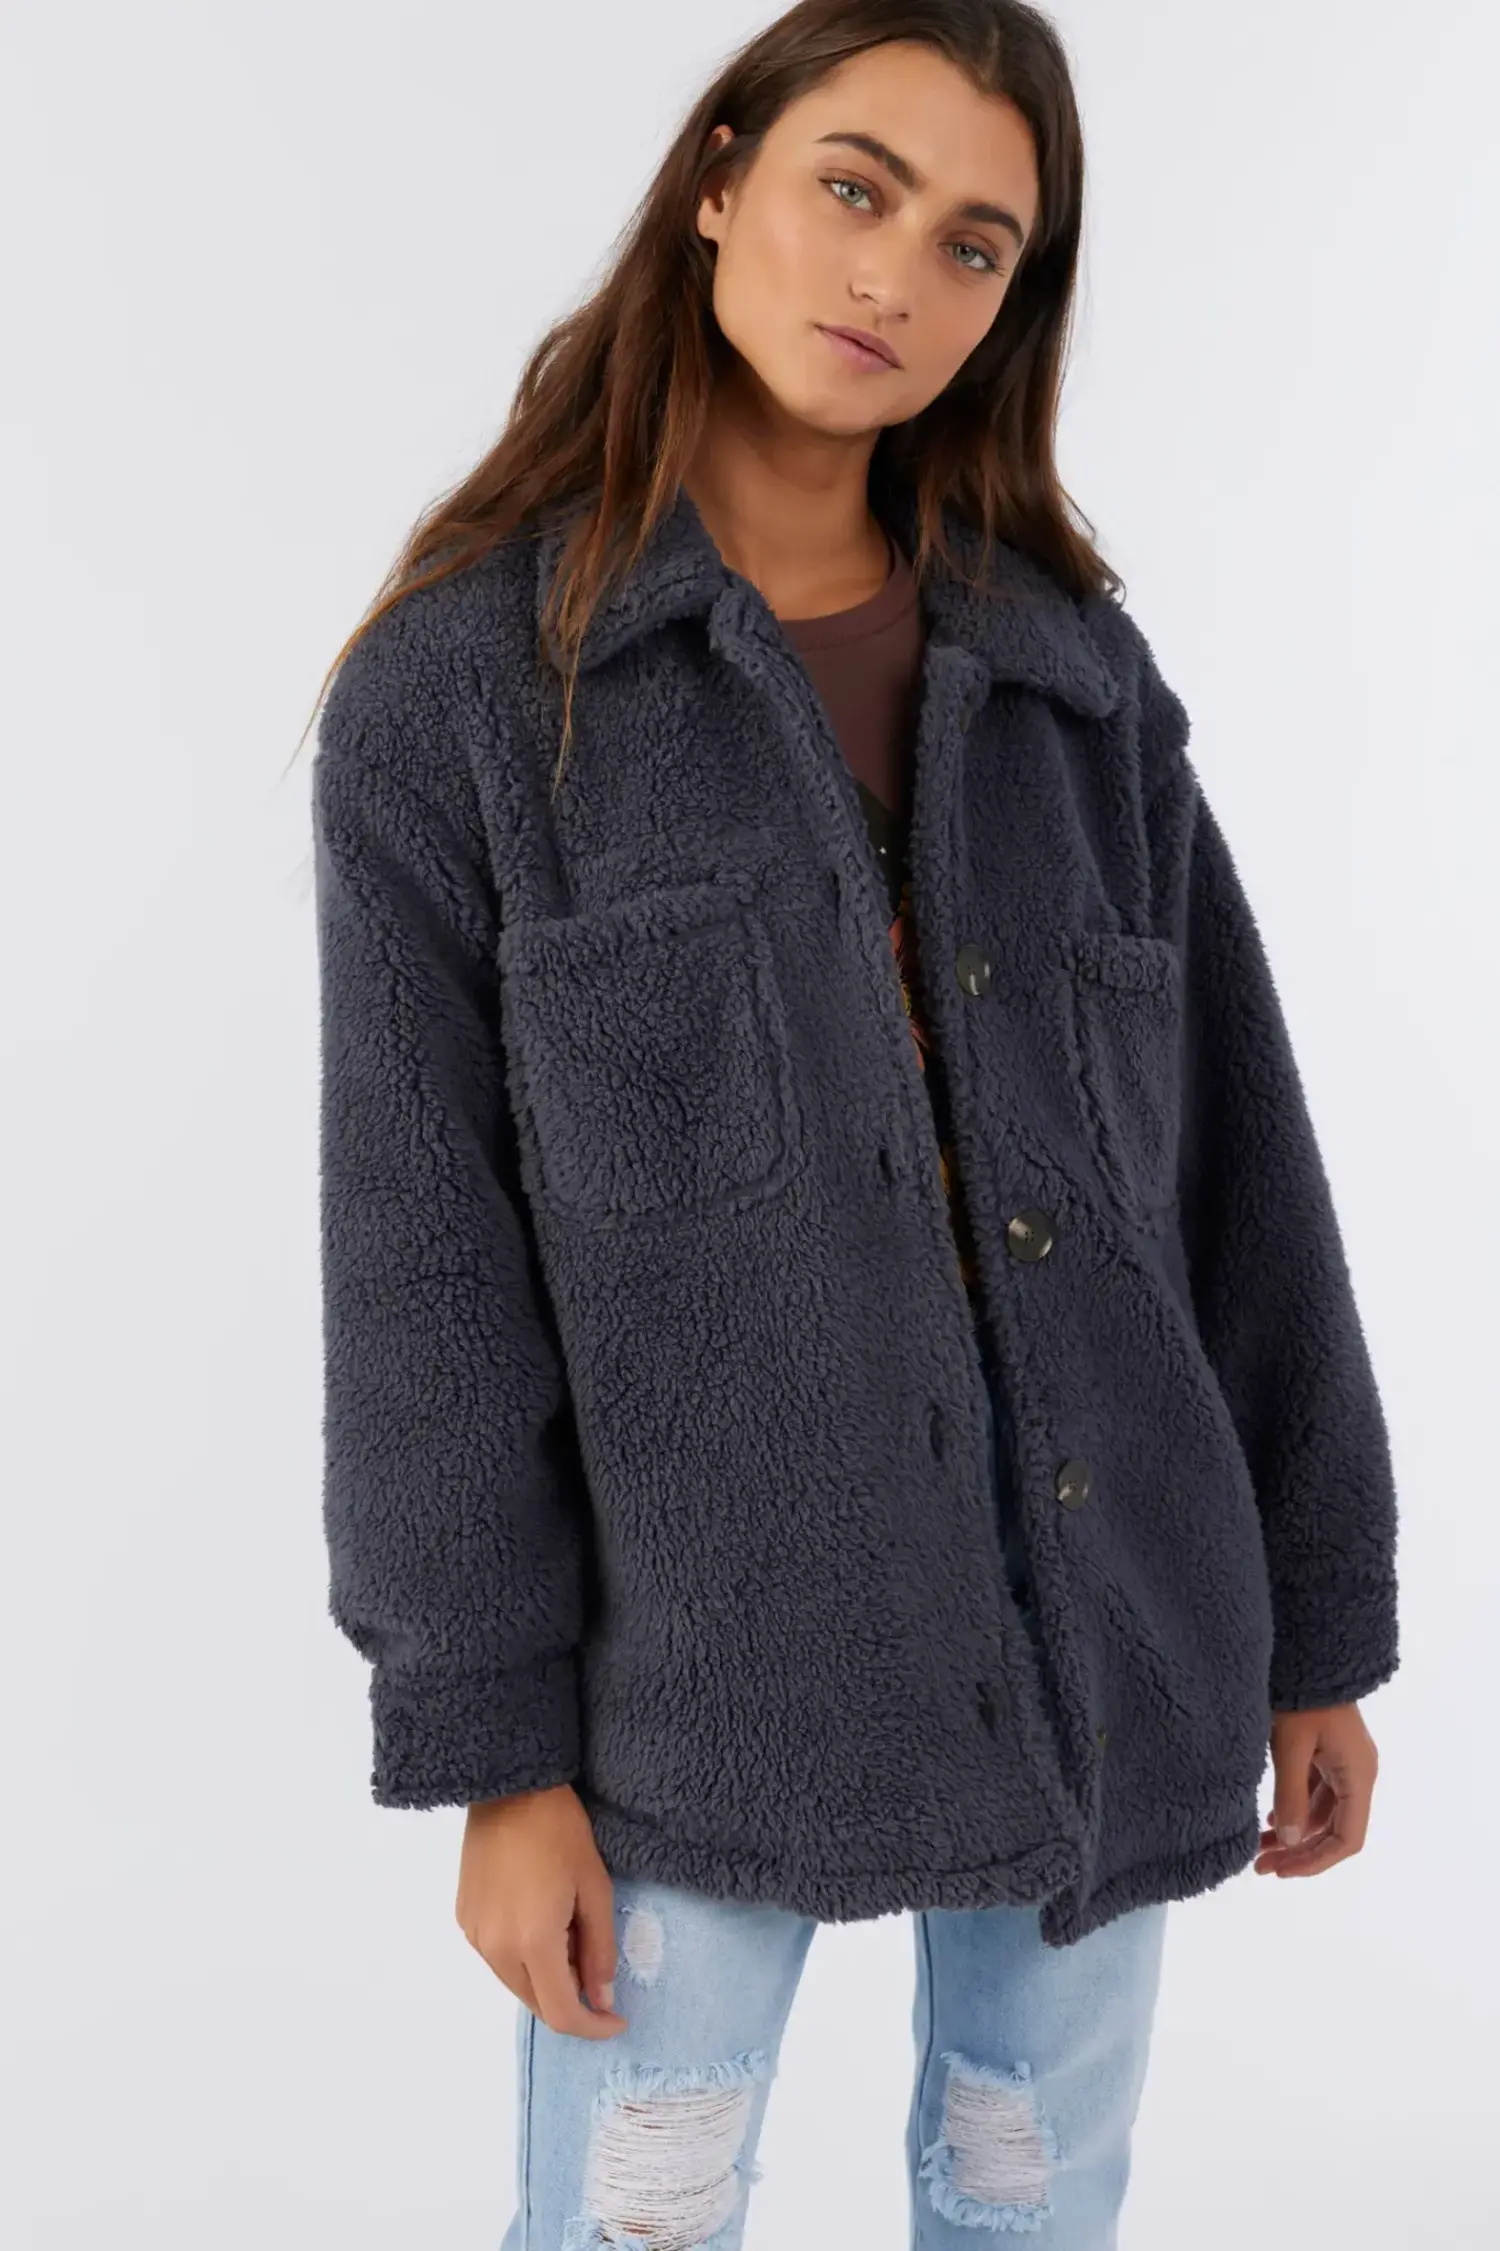 Women's fleece jackets and vests – O'Neill